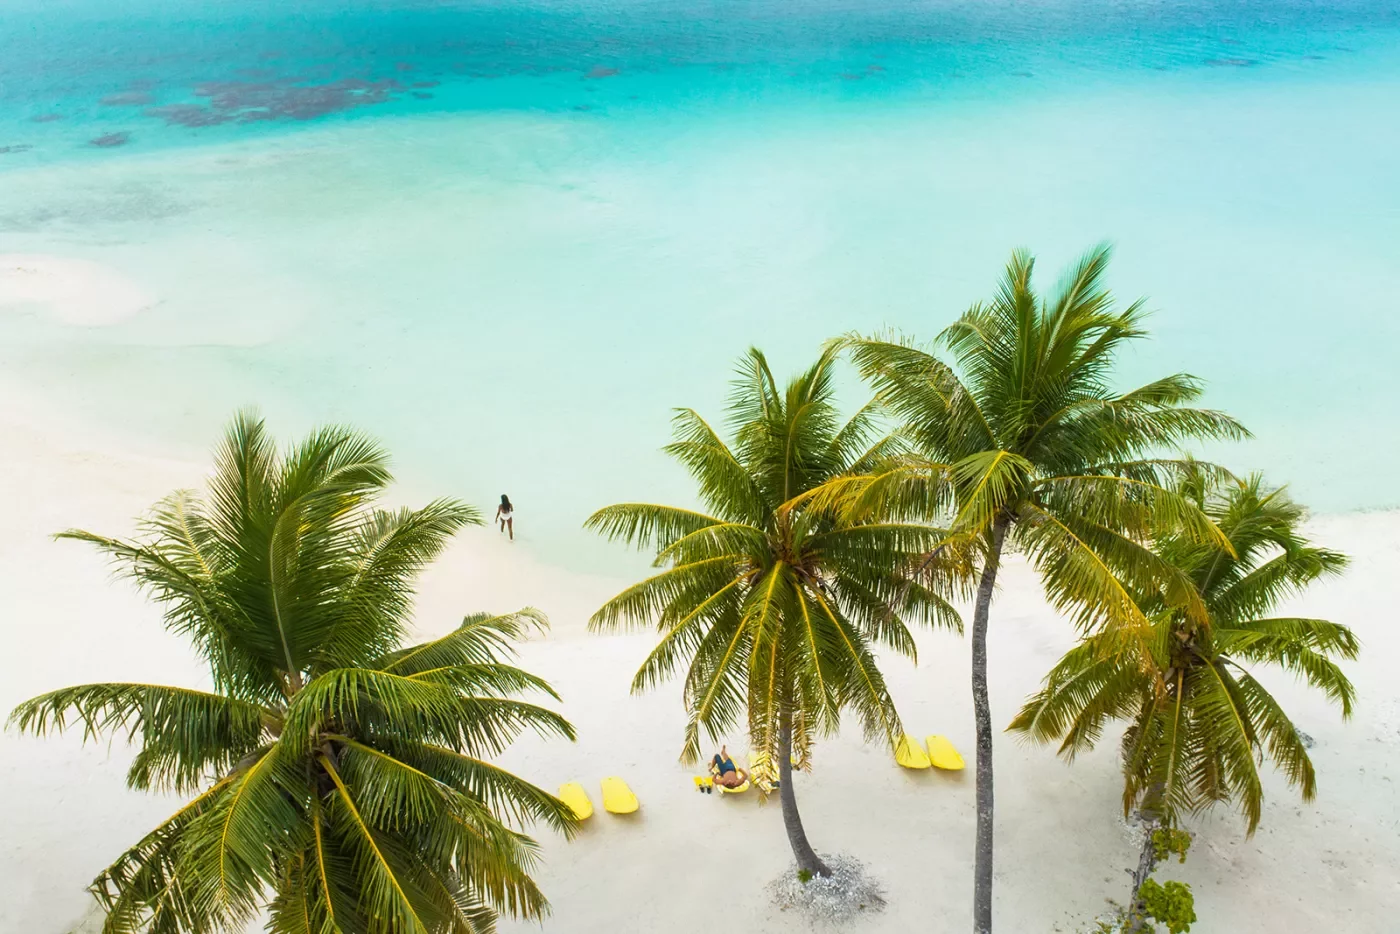 Palm trees and white sand beaches in Tahiti